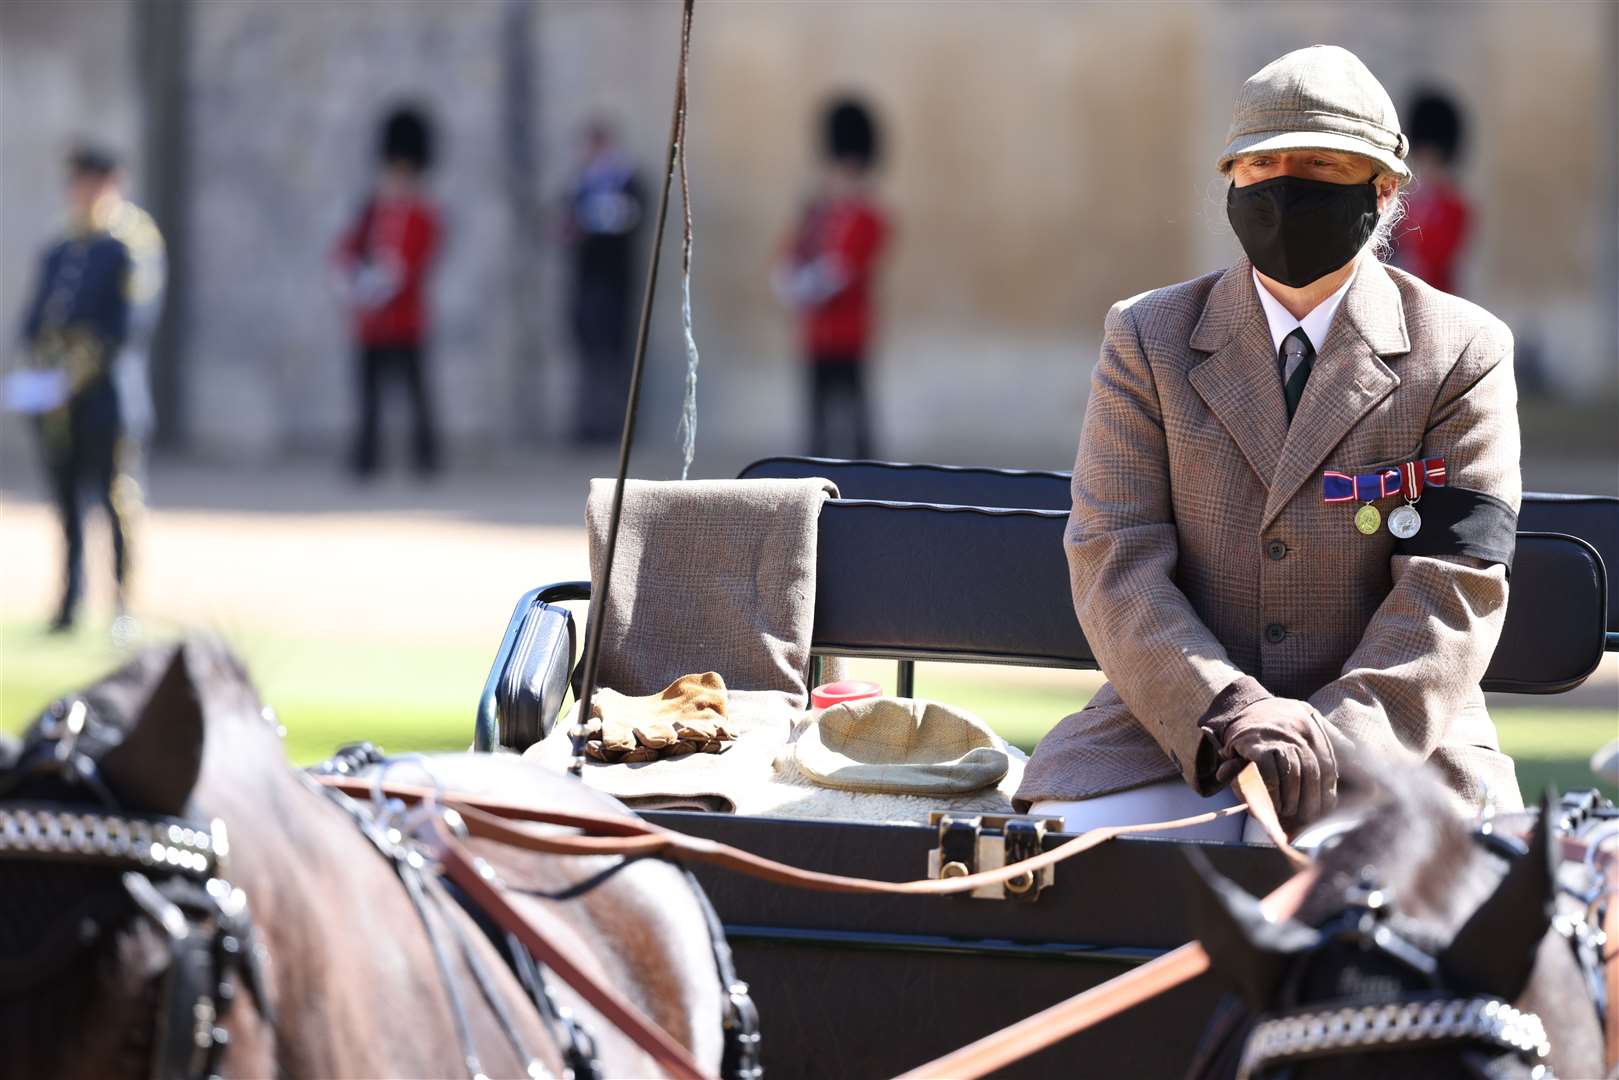 The Duke of Edinburgh’s driving carriage in the Quadrangle (Ian Vogler/Daily Mirror/PA)